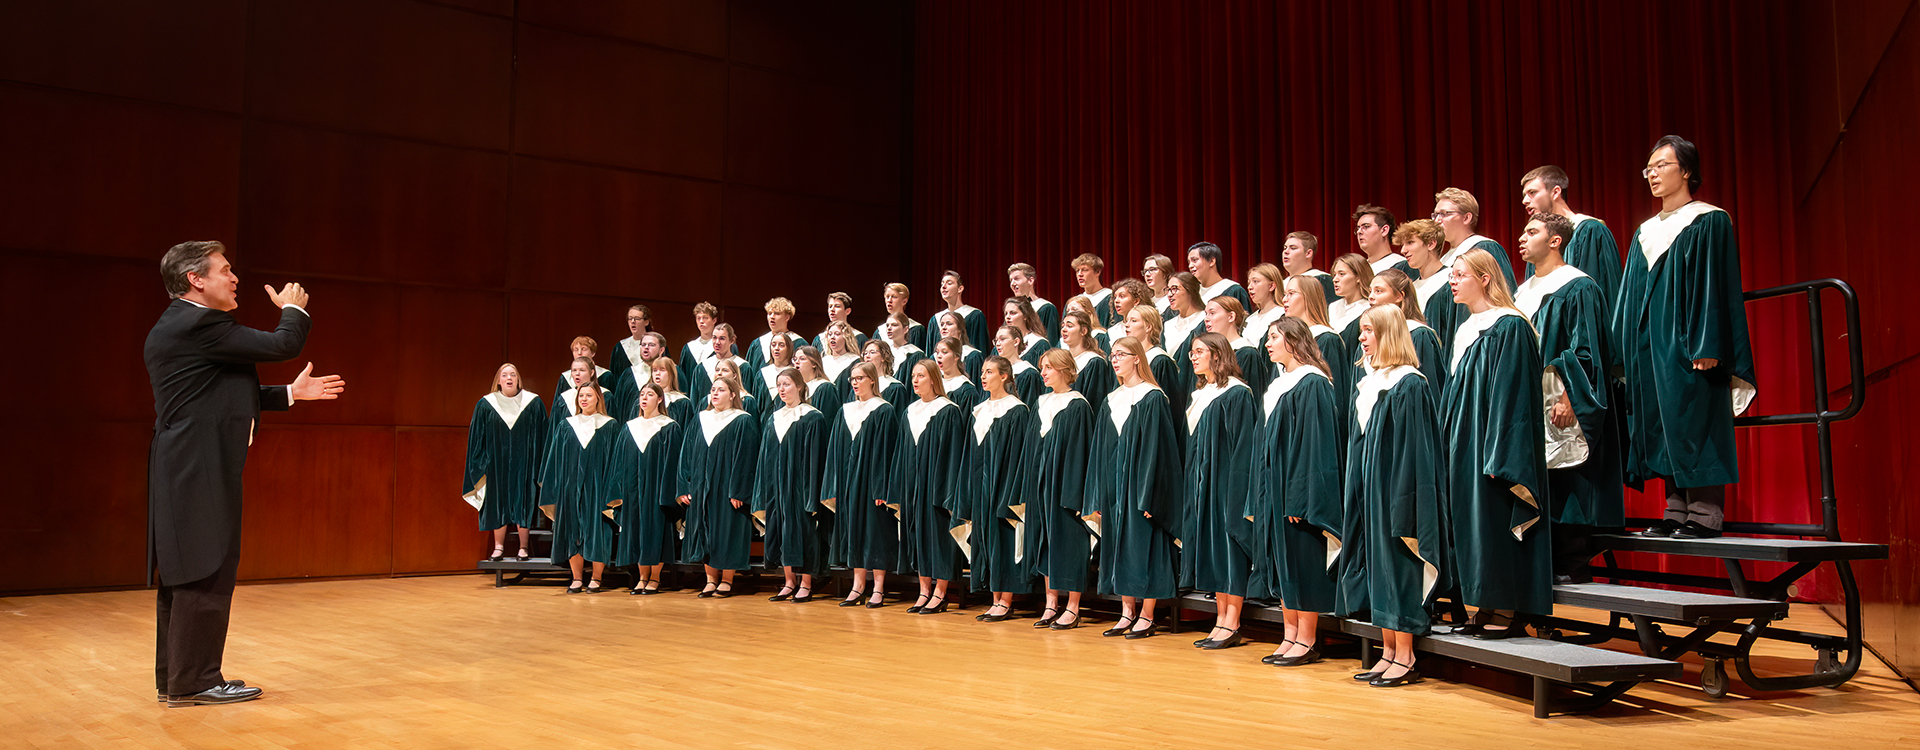 Wisconsin Lutheran Choir singing on stage